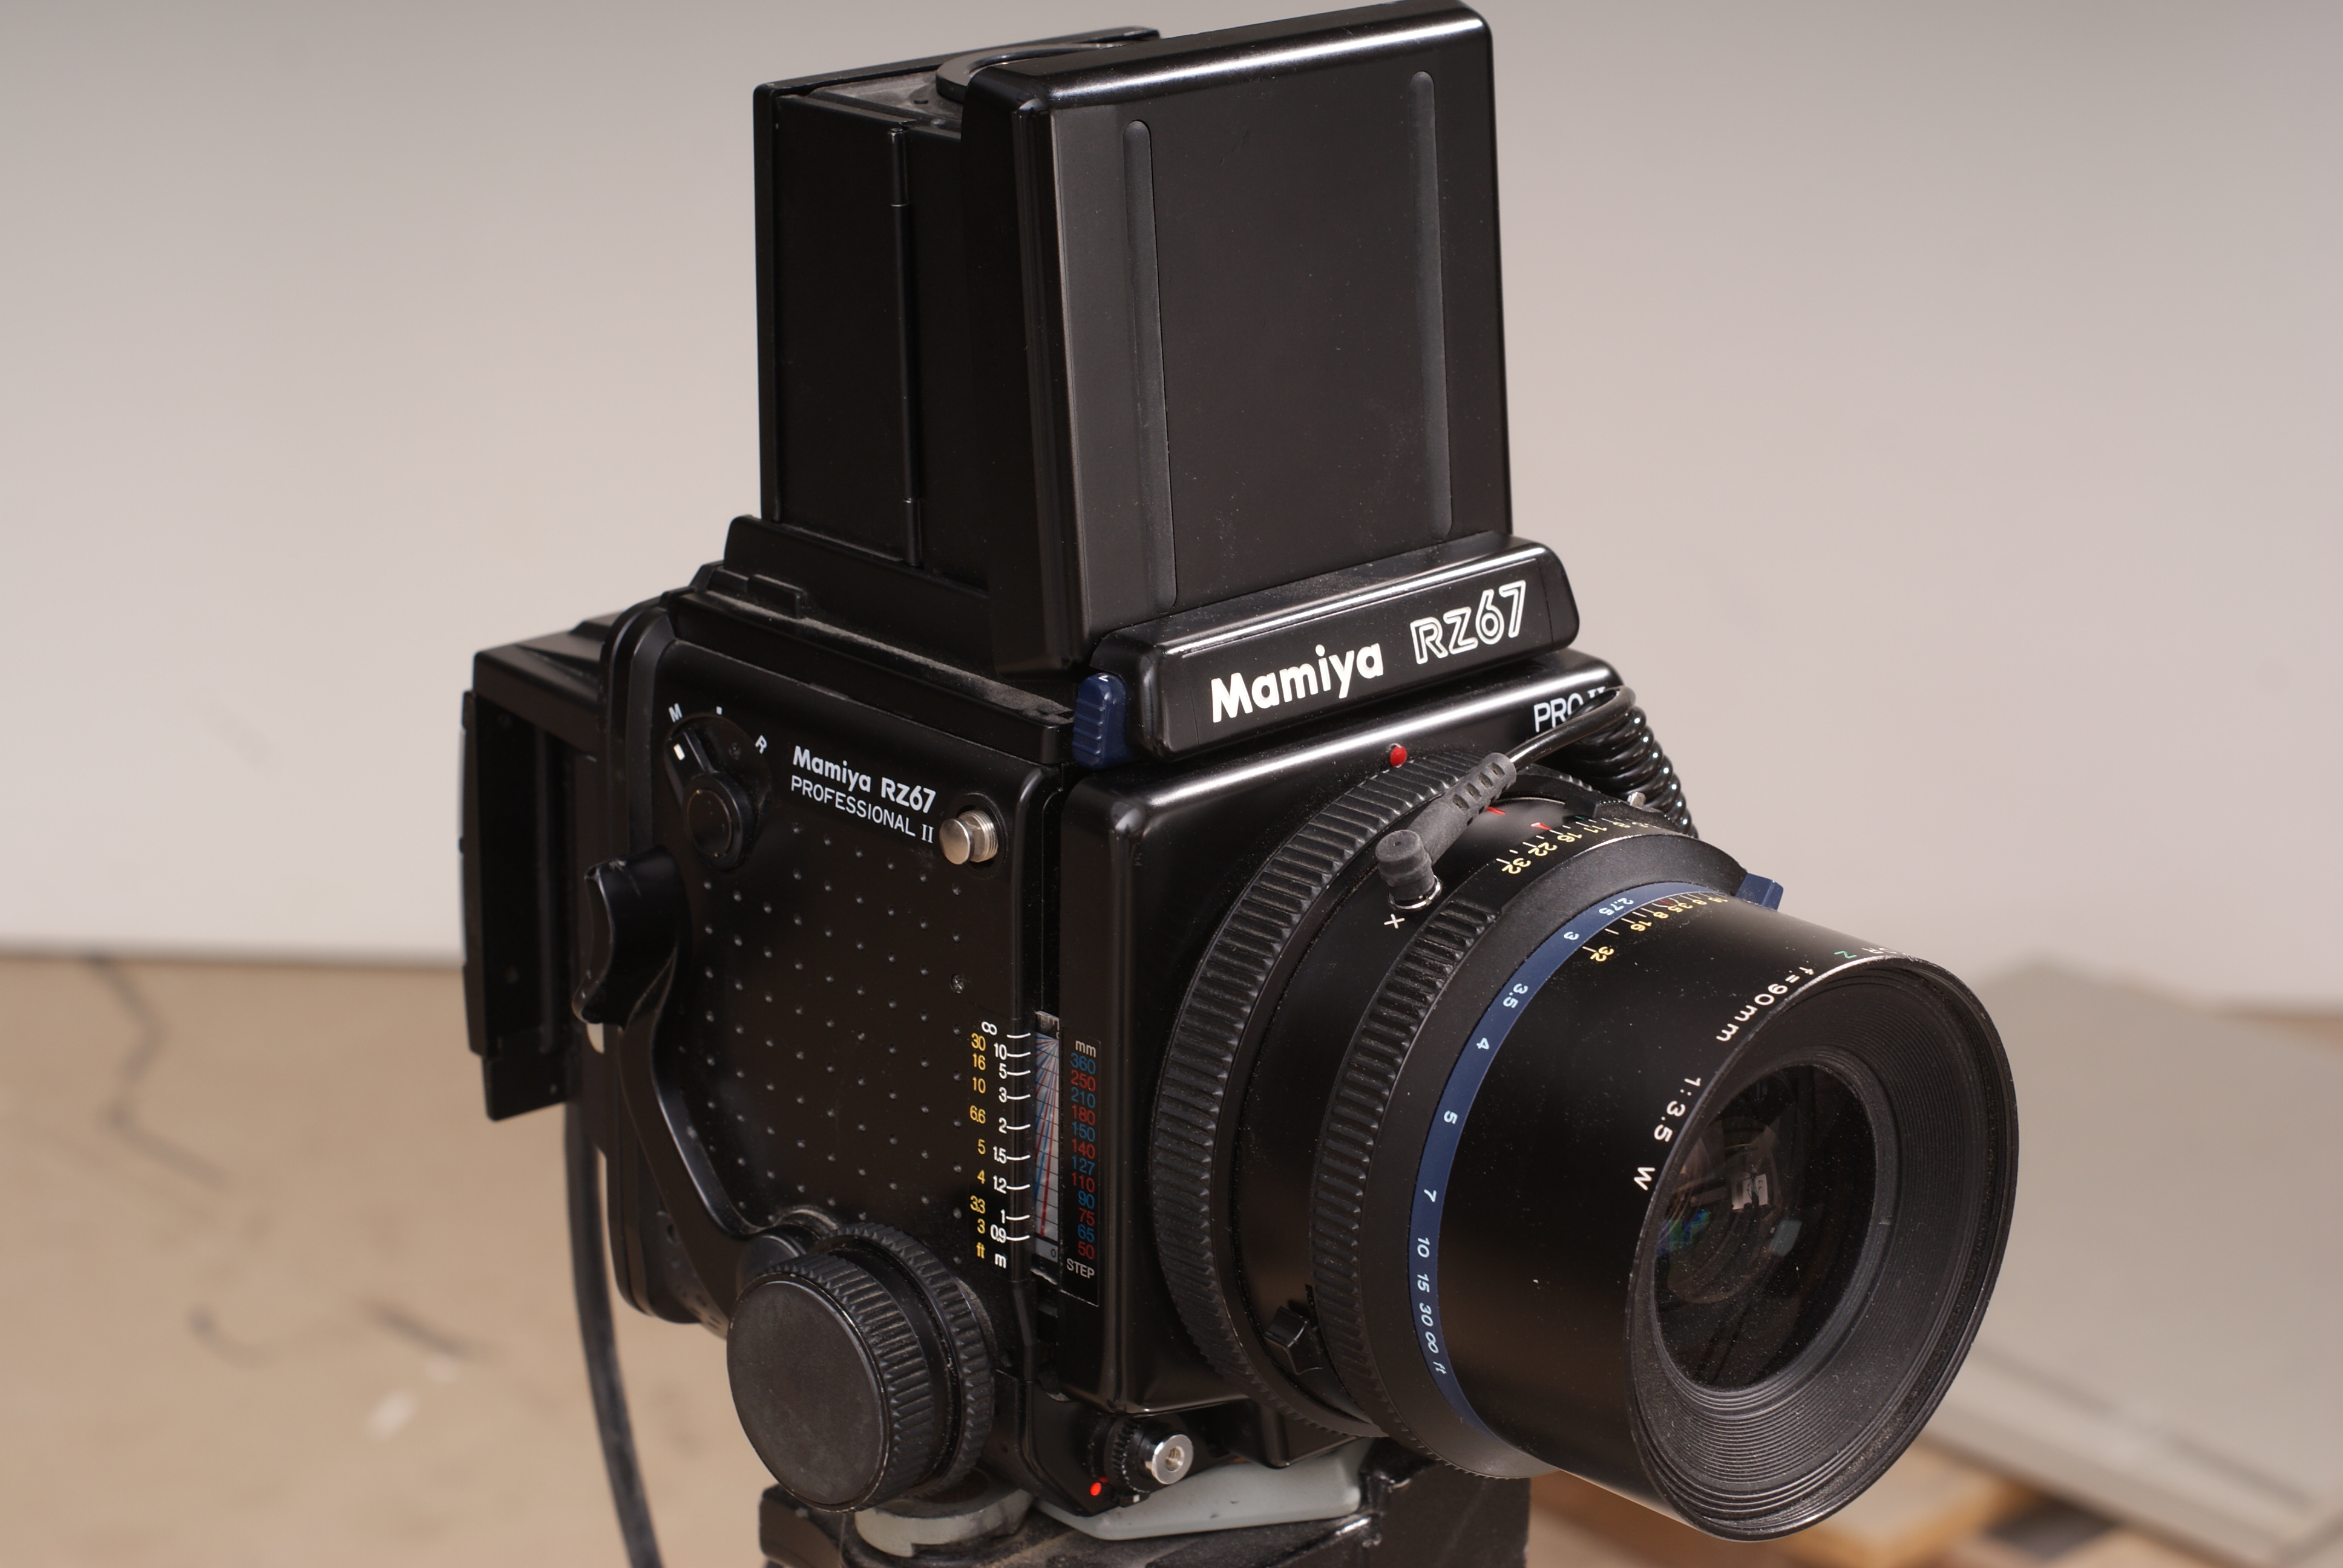 Mamiya RZ67 Professional II with Mamiya Sekor Z 90mm f3.5 W lens and Phase One digital back